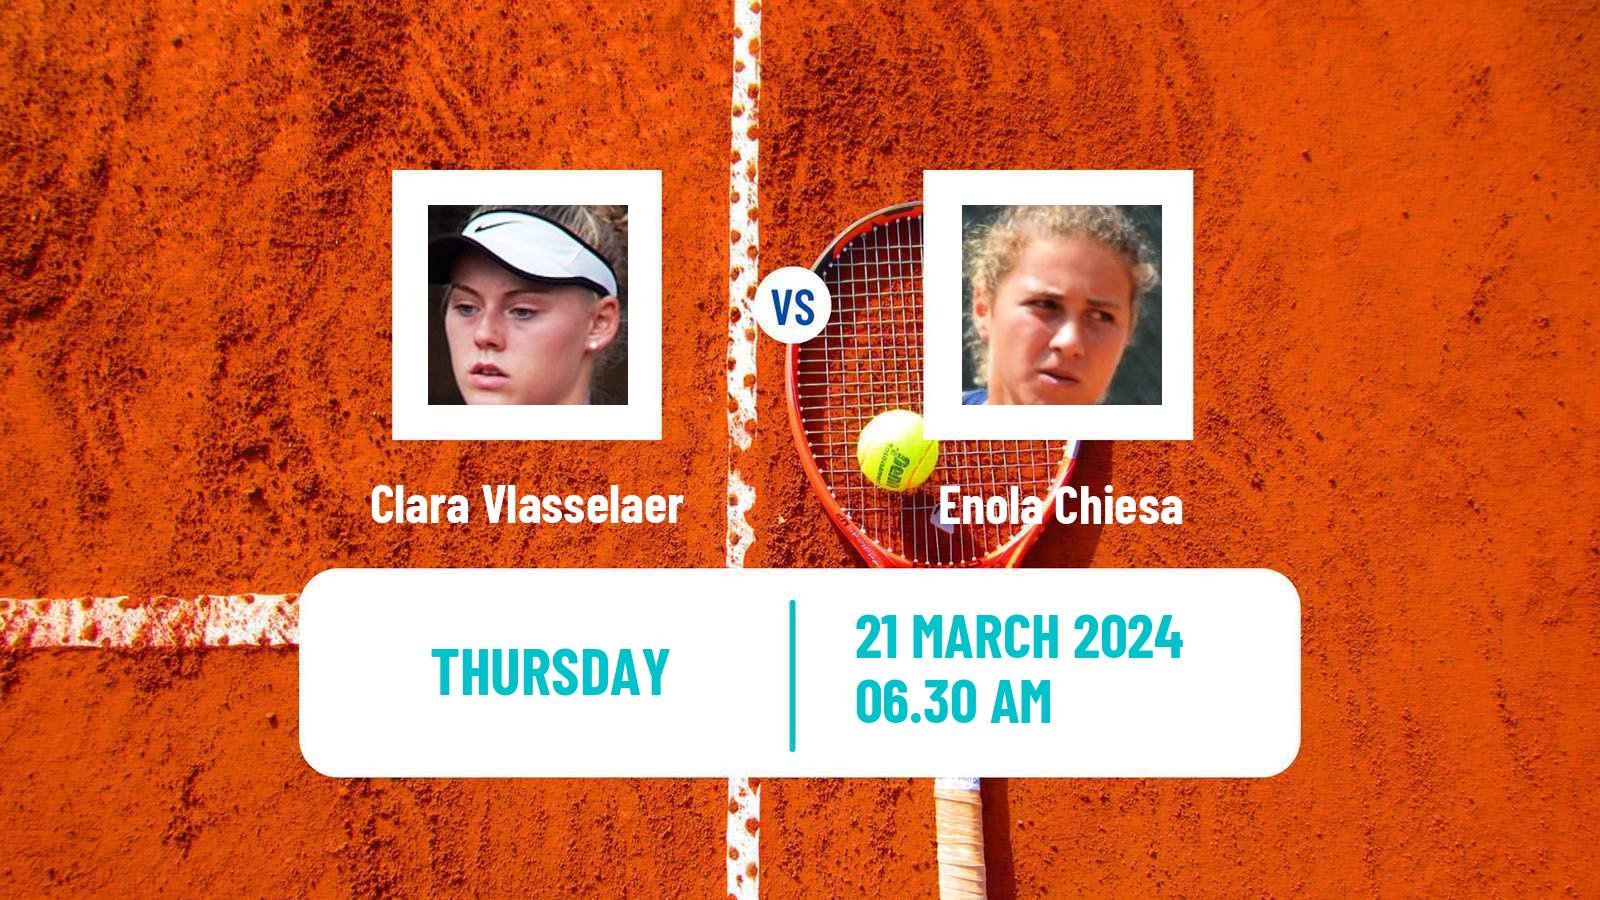 Tennis ITF W15 Le Havre Women Clara Vlasselaer - Enola Chiesa